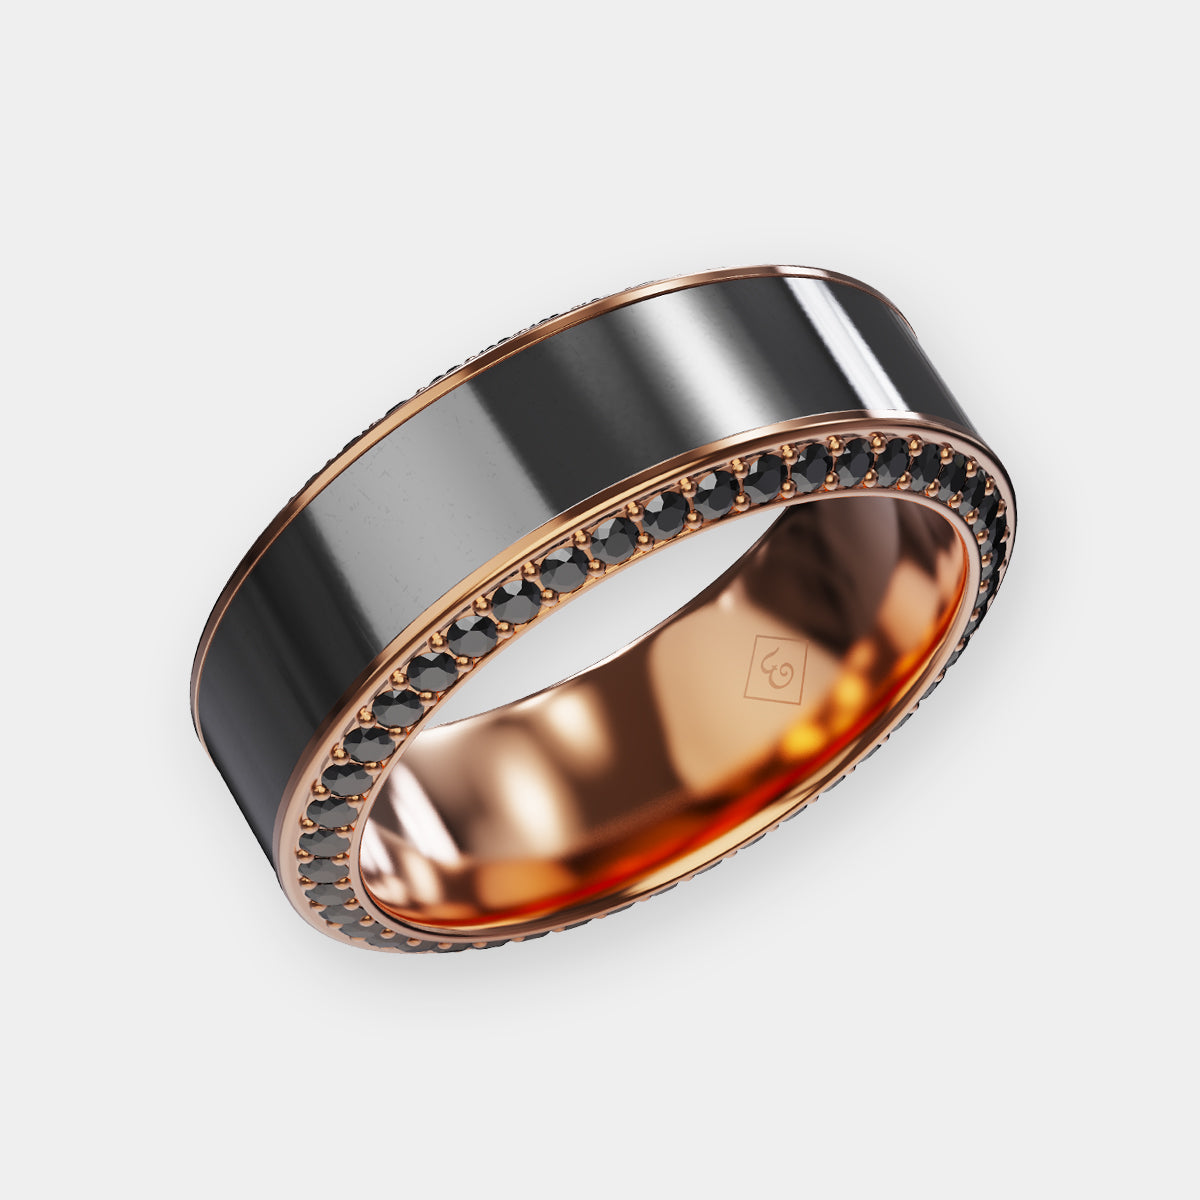 Men's Black Diamond 8mm Ring with Rose Gold Band with Black Diamond Inlay and Black Diamond Insets | Elysium HELIOS | Men’s Rose Gold Band | Men's Black Diamond Wedding Ring